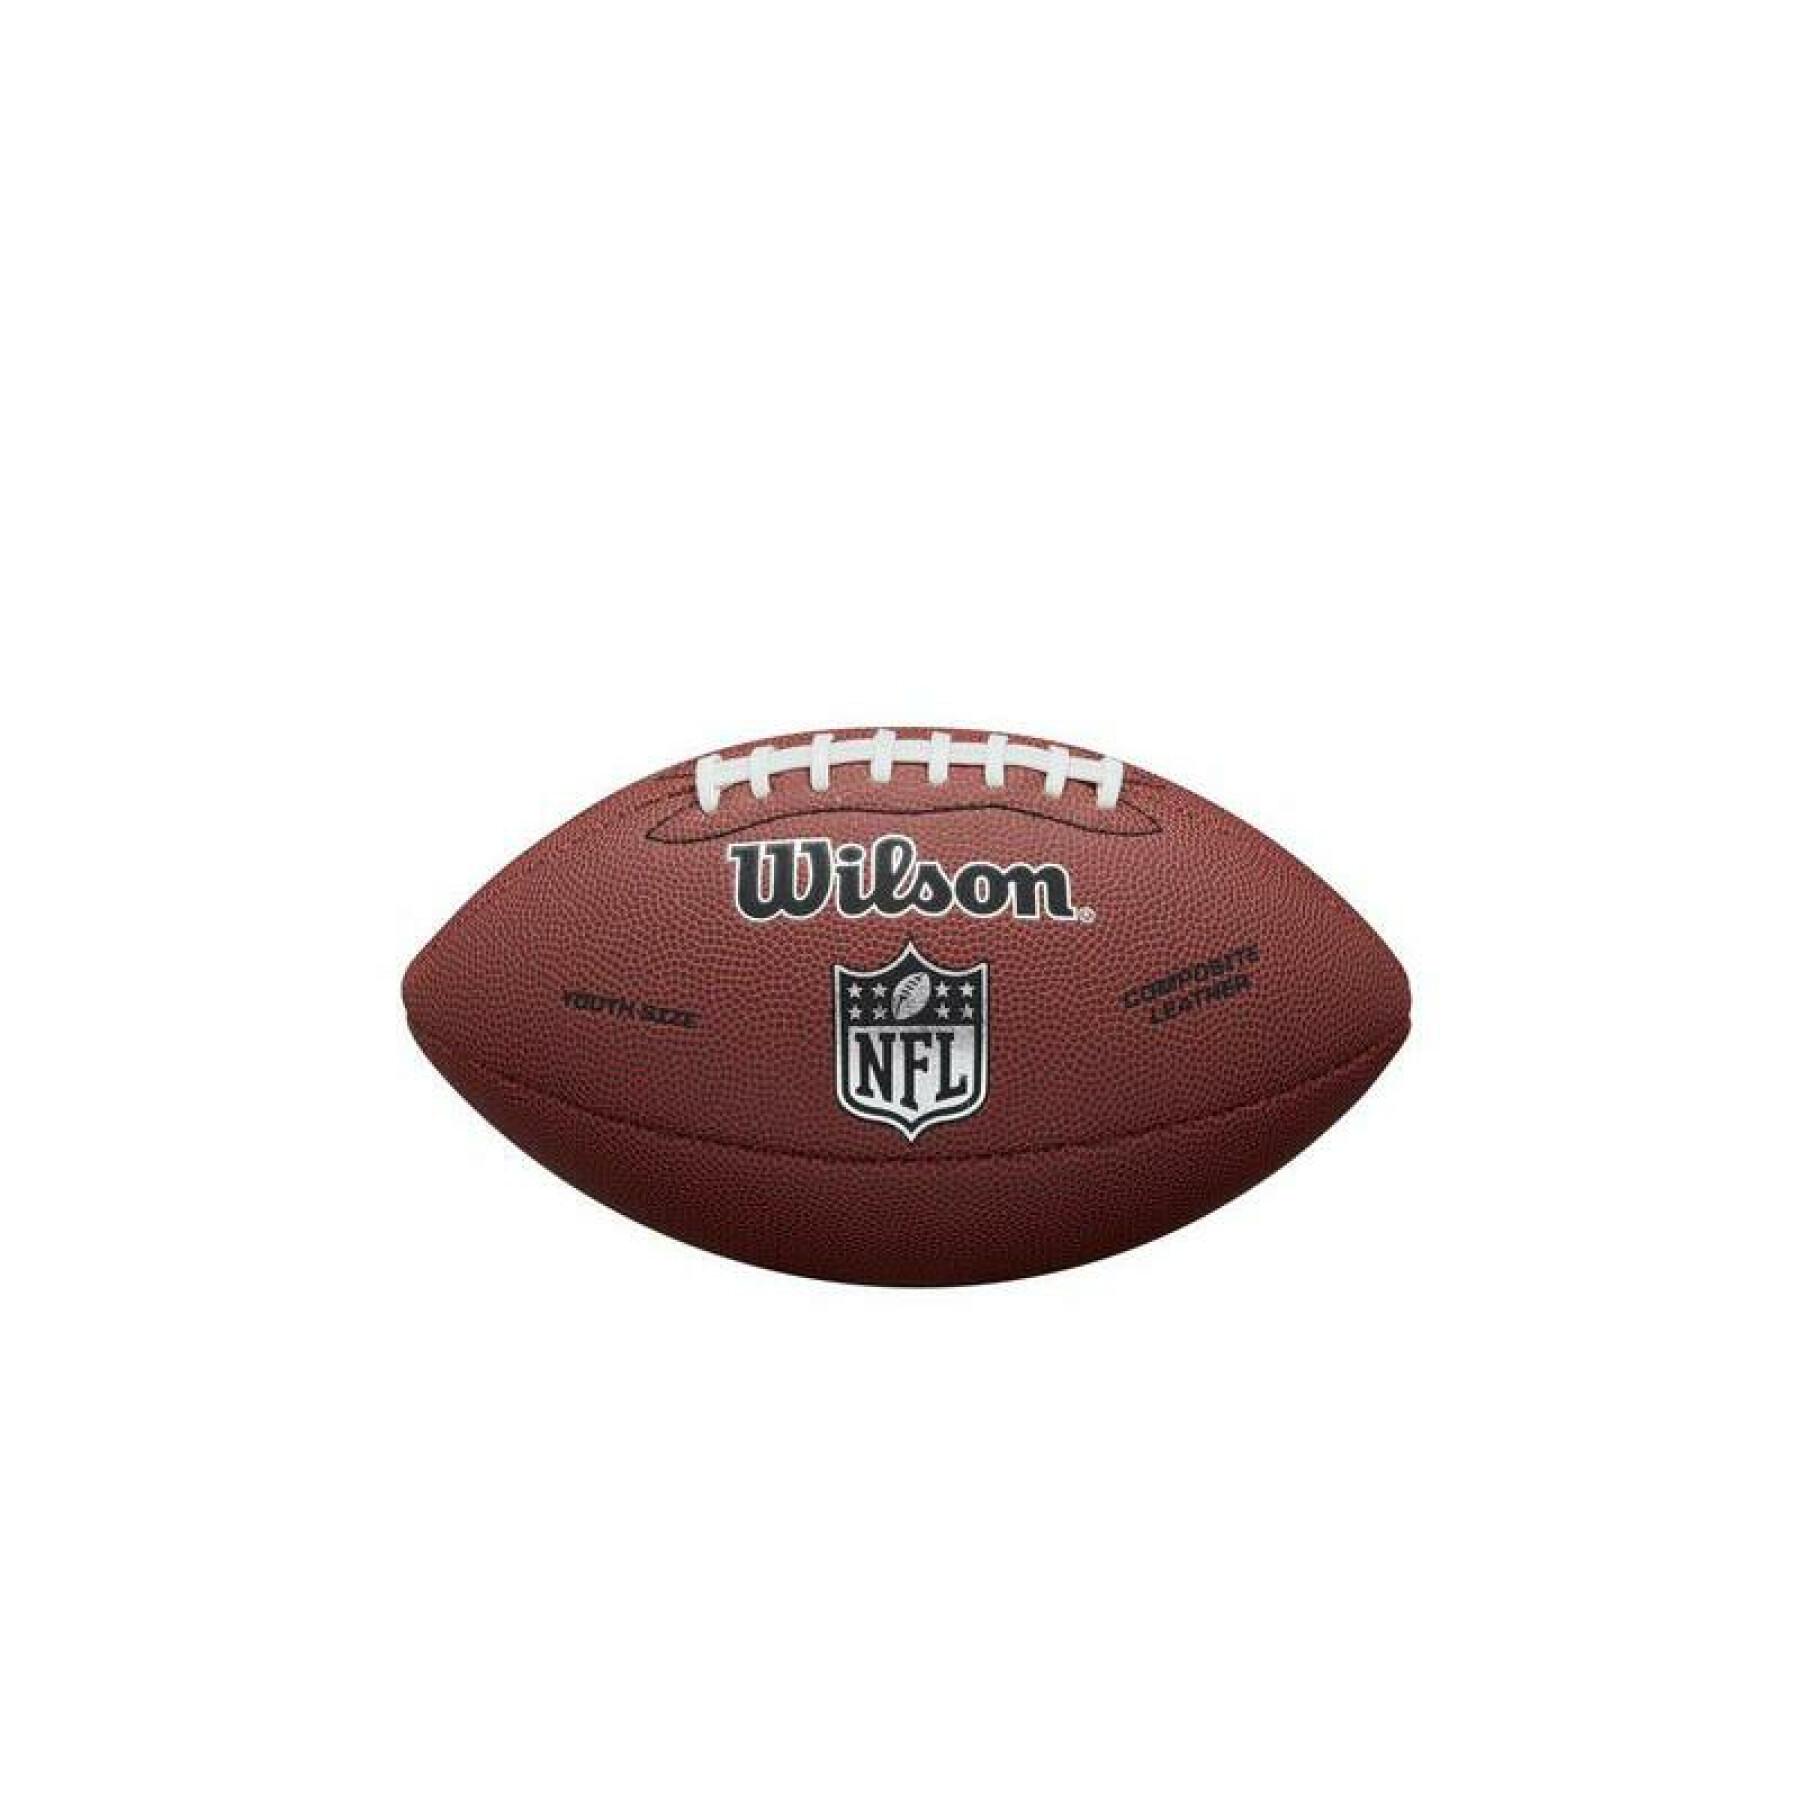 Balon Wilson NFL Limited off